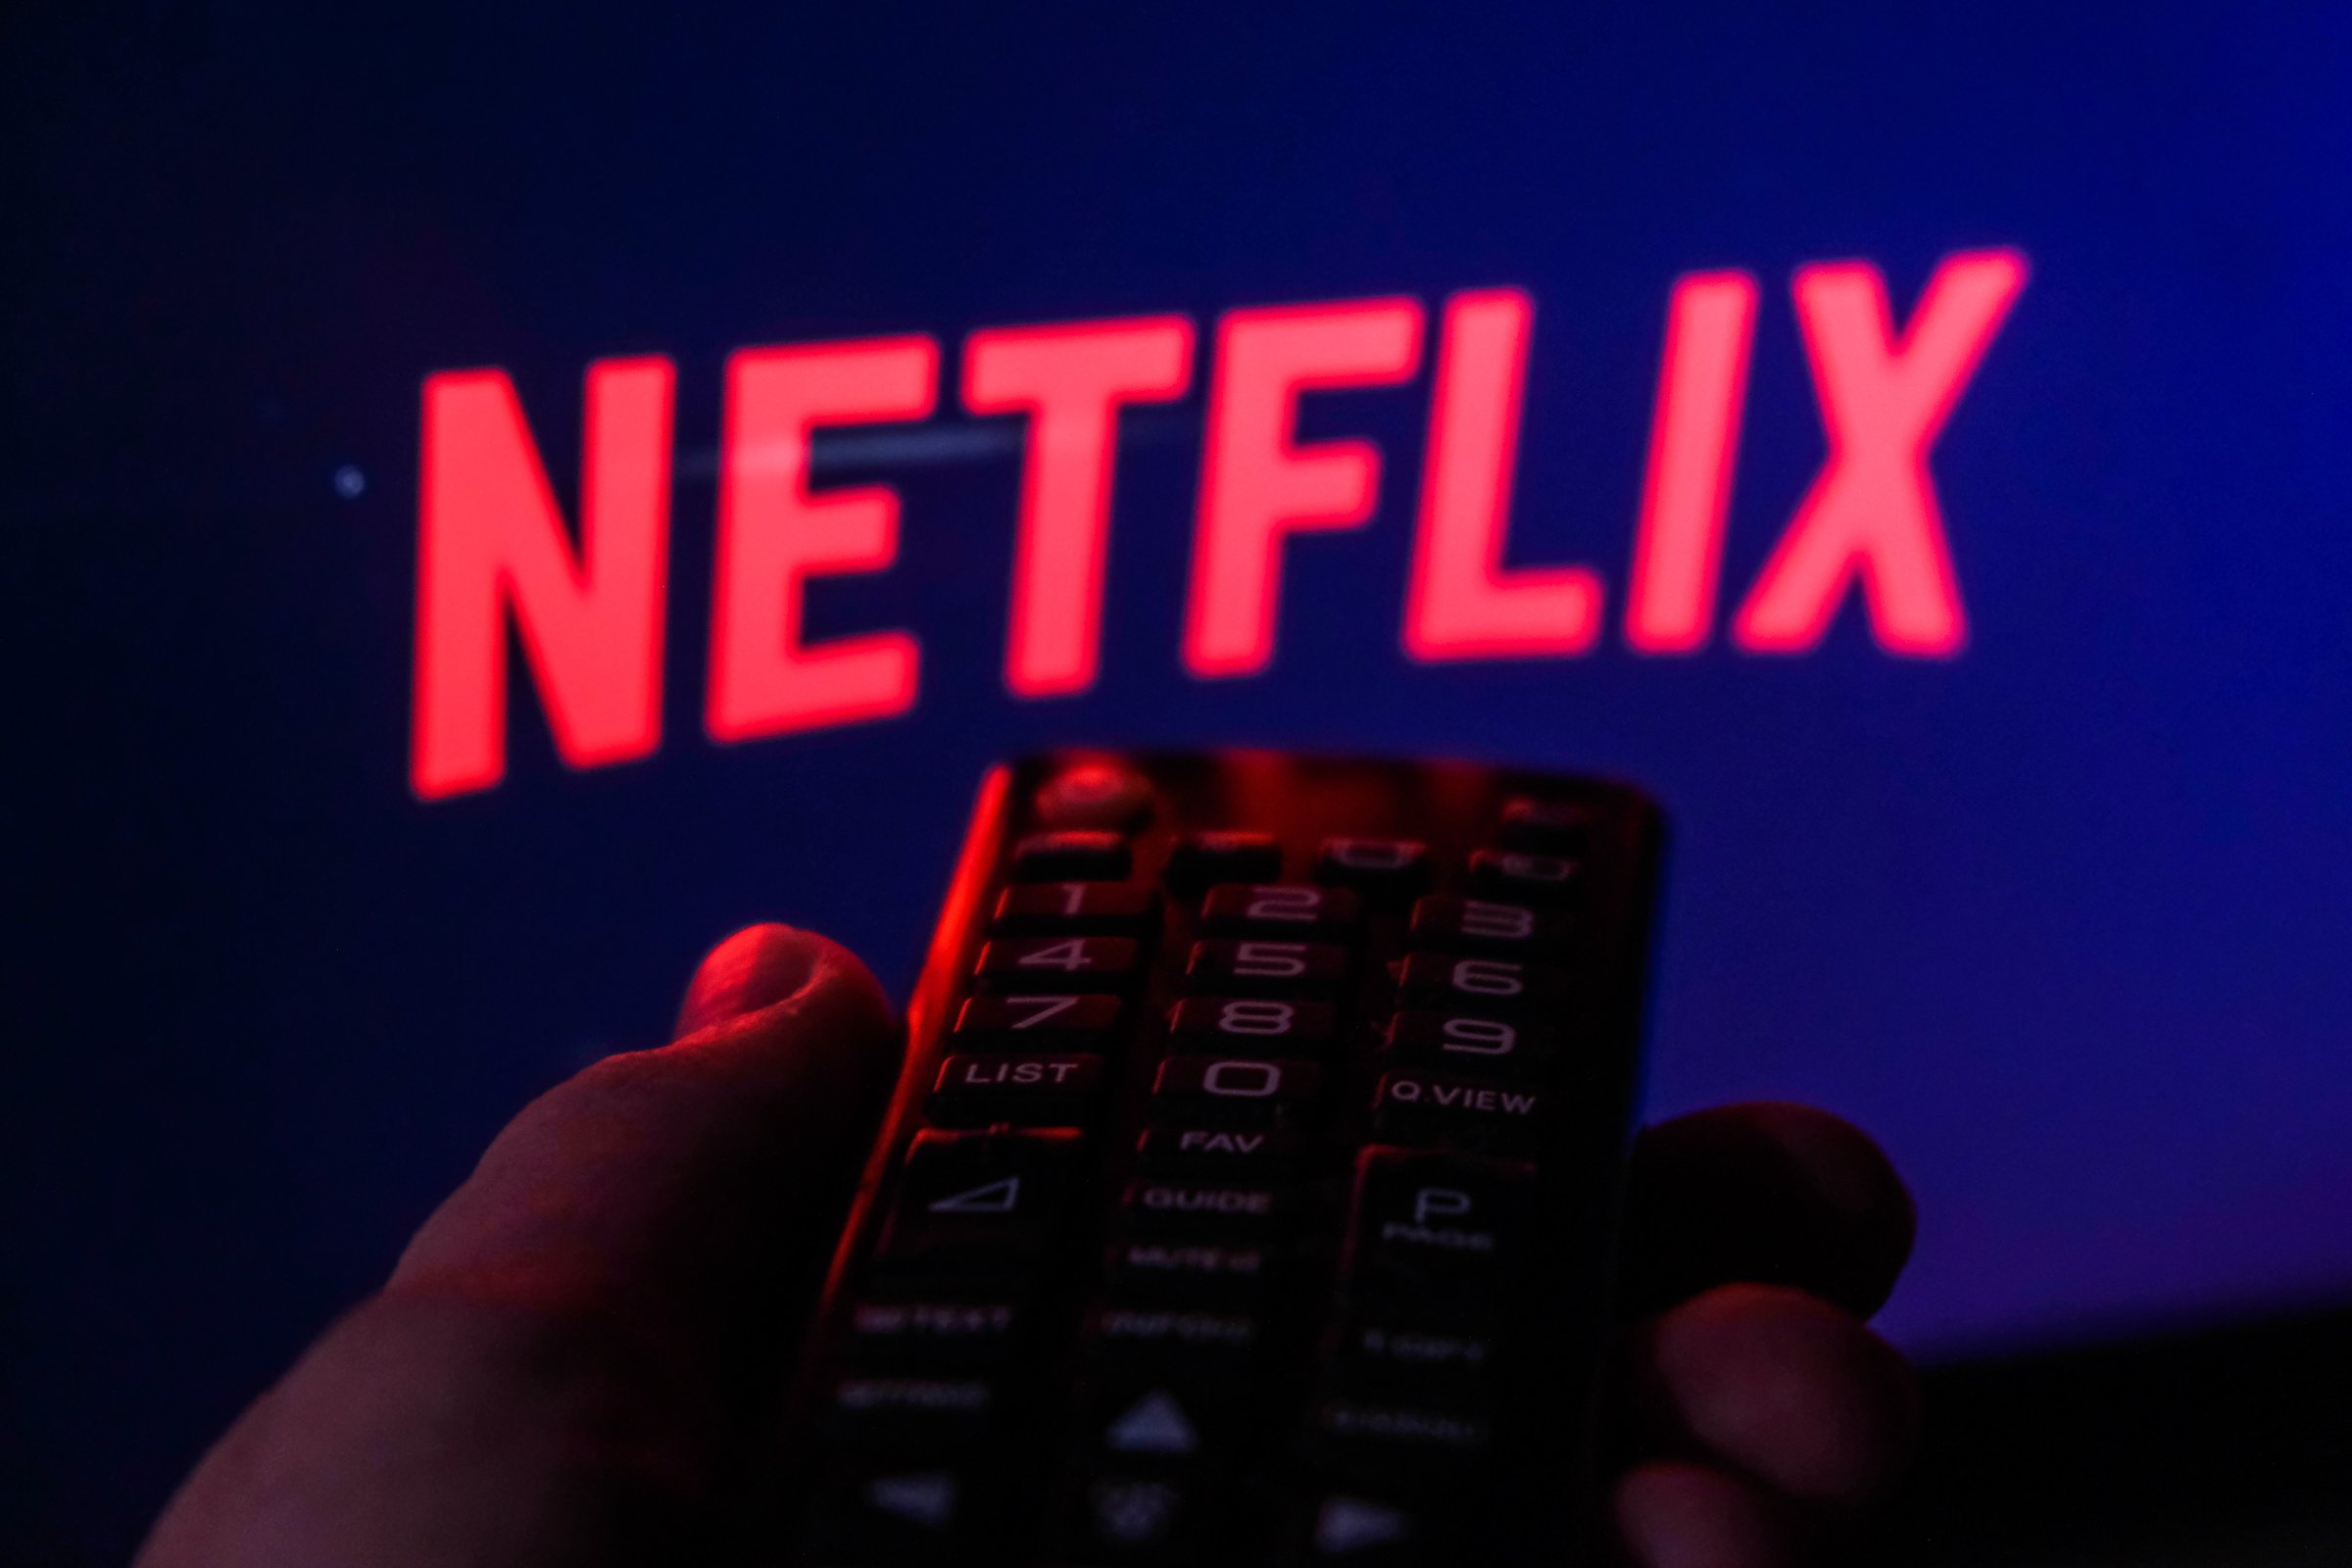 Netflix logo with remote control